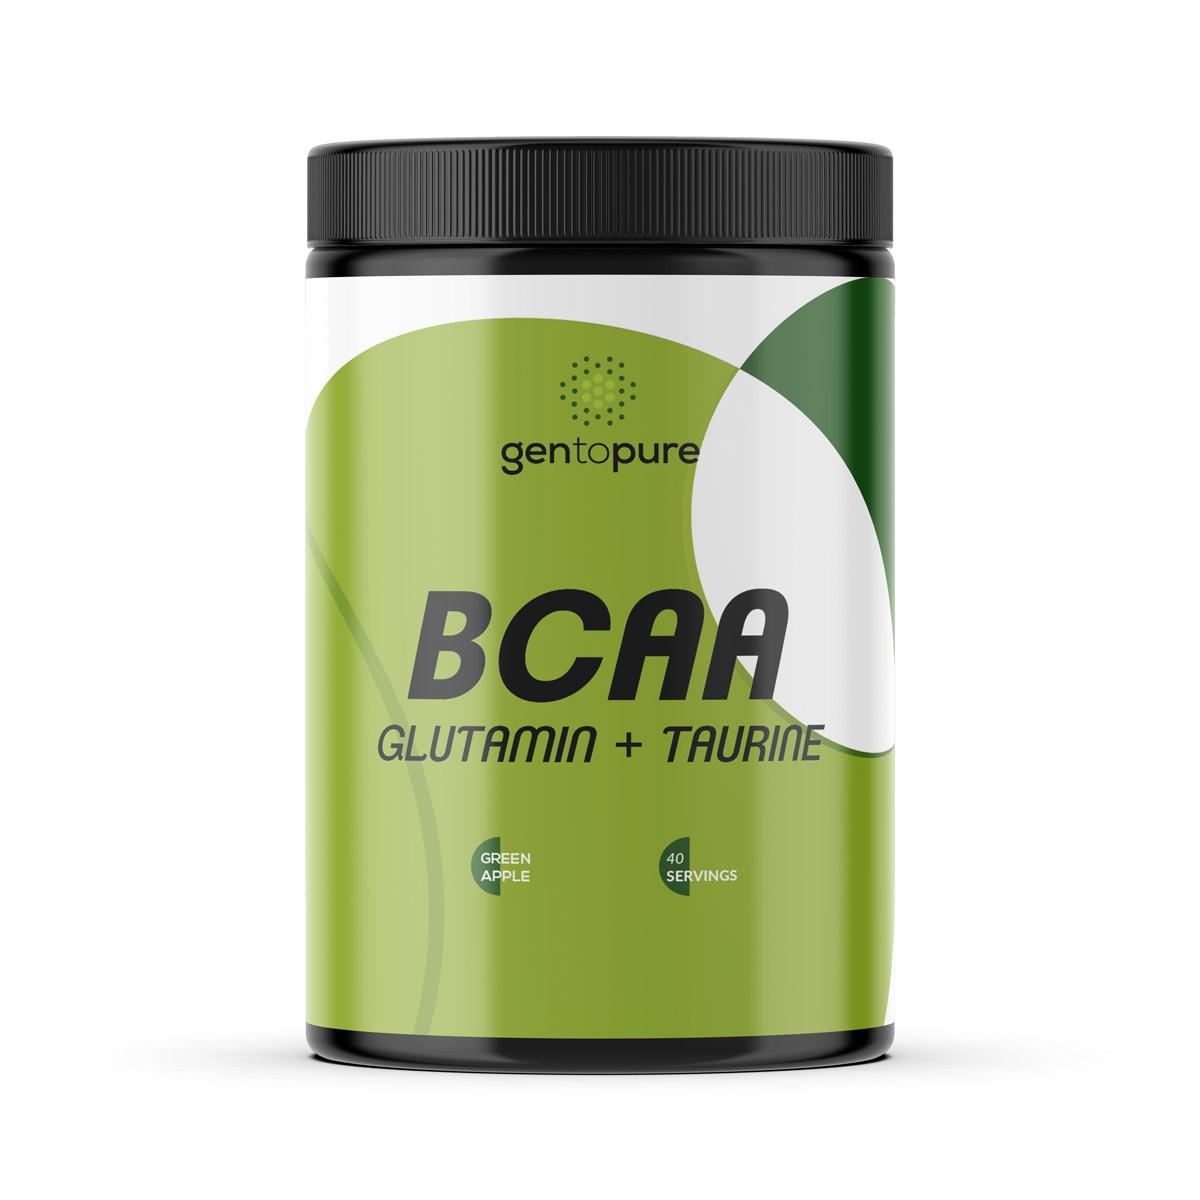 BCAA (Glutamine + Taurine) - 400g - Yeşil Elma Aromalı